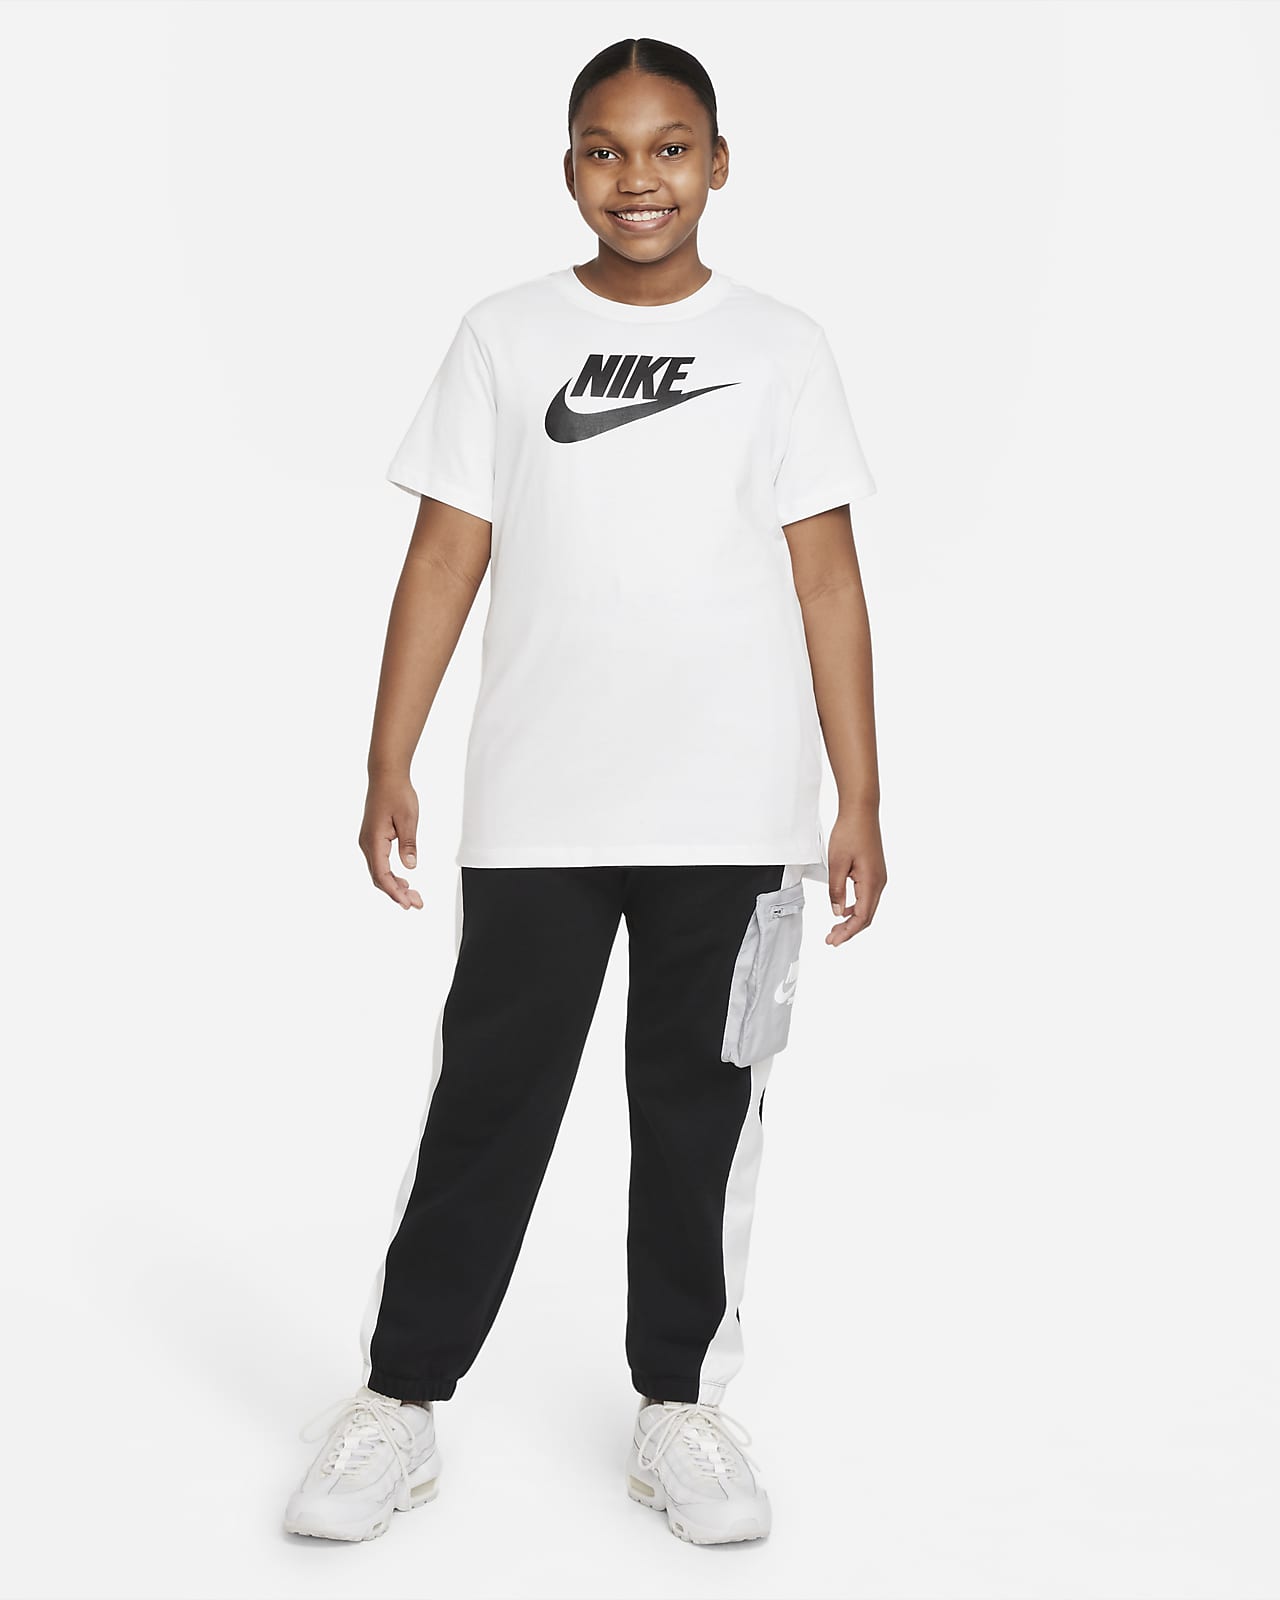 Verdorde Dubbelzinnigheid Voorspeller Nike Big Kids' (Girls') T-Shirt (Extended Size). Nike.com